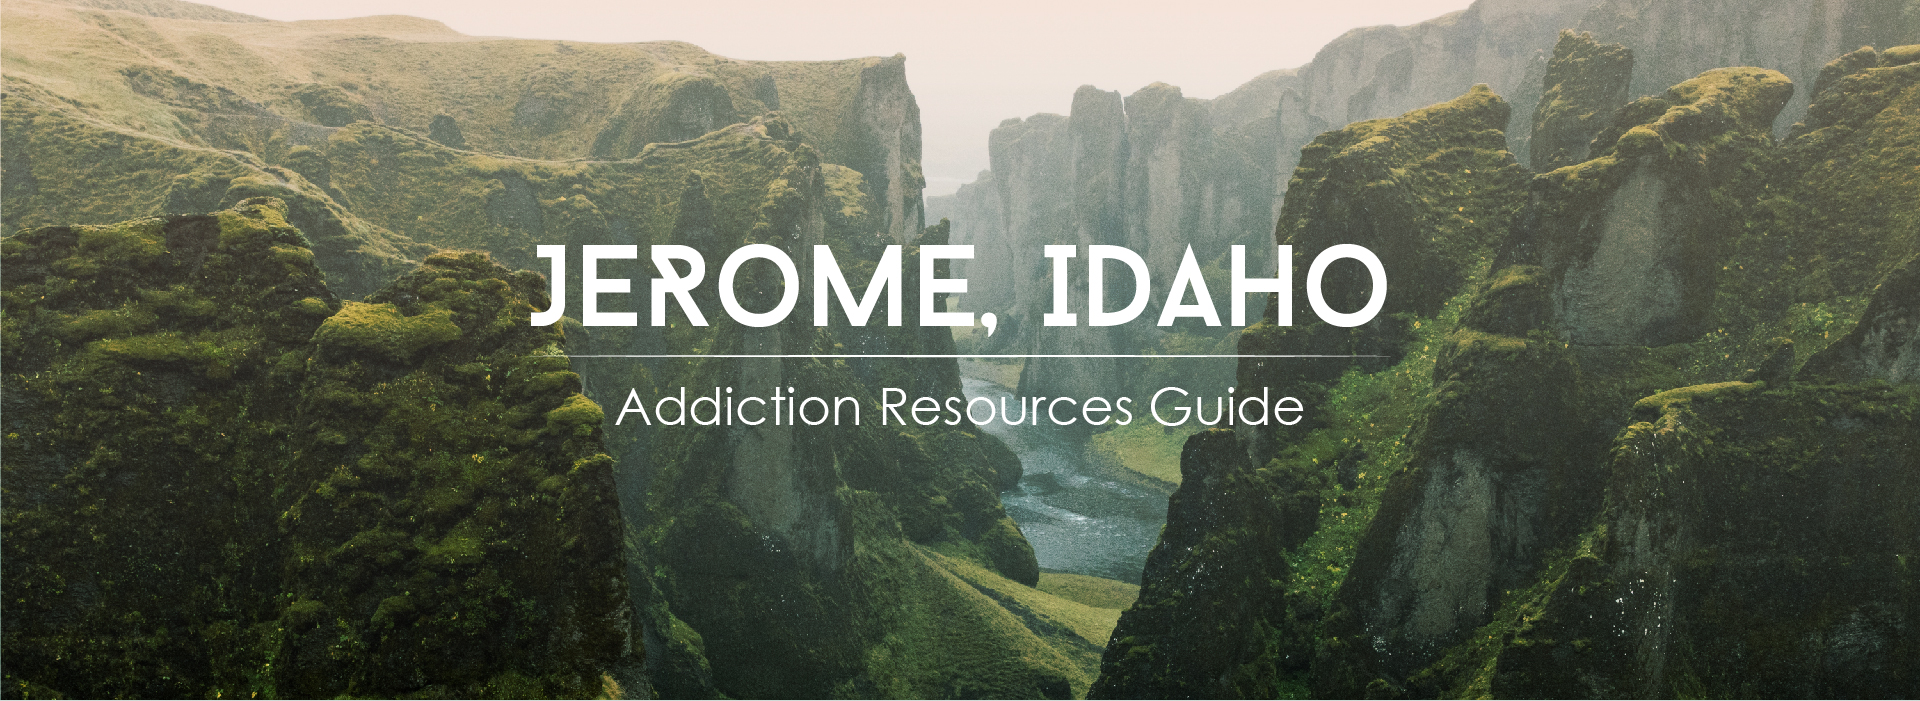 Jerome, Idaho, addiction resources guide